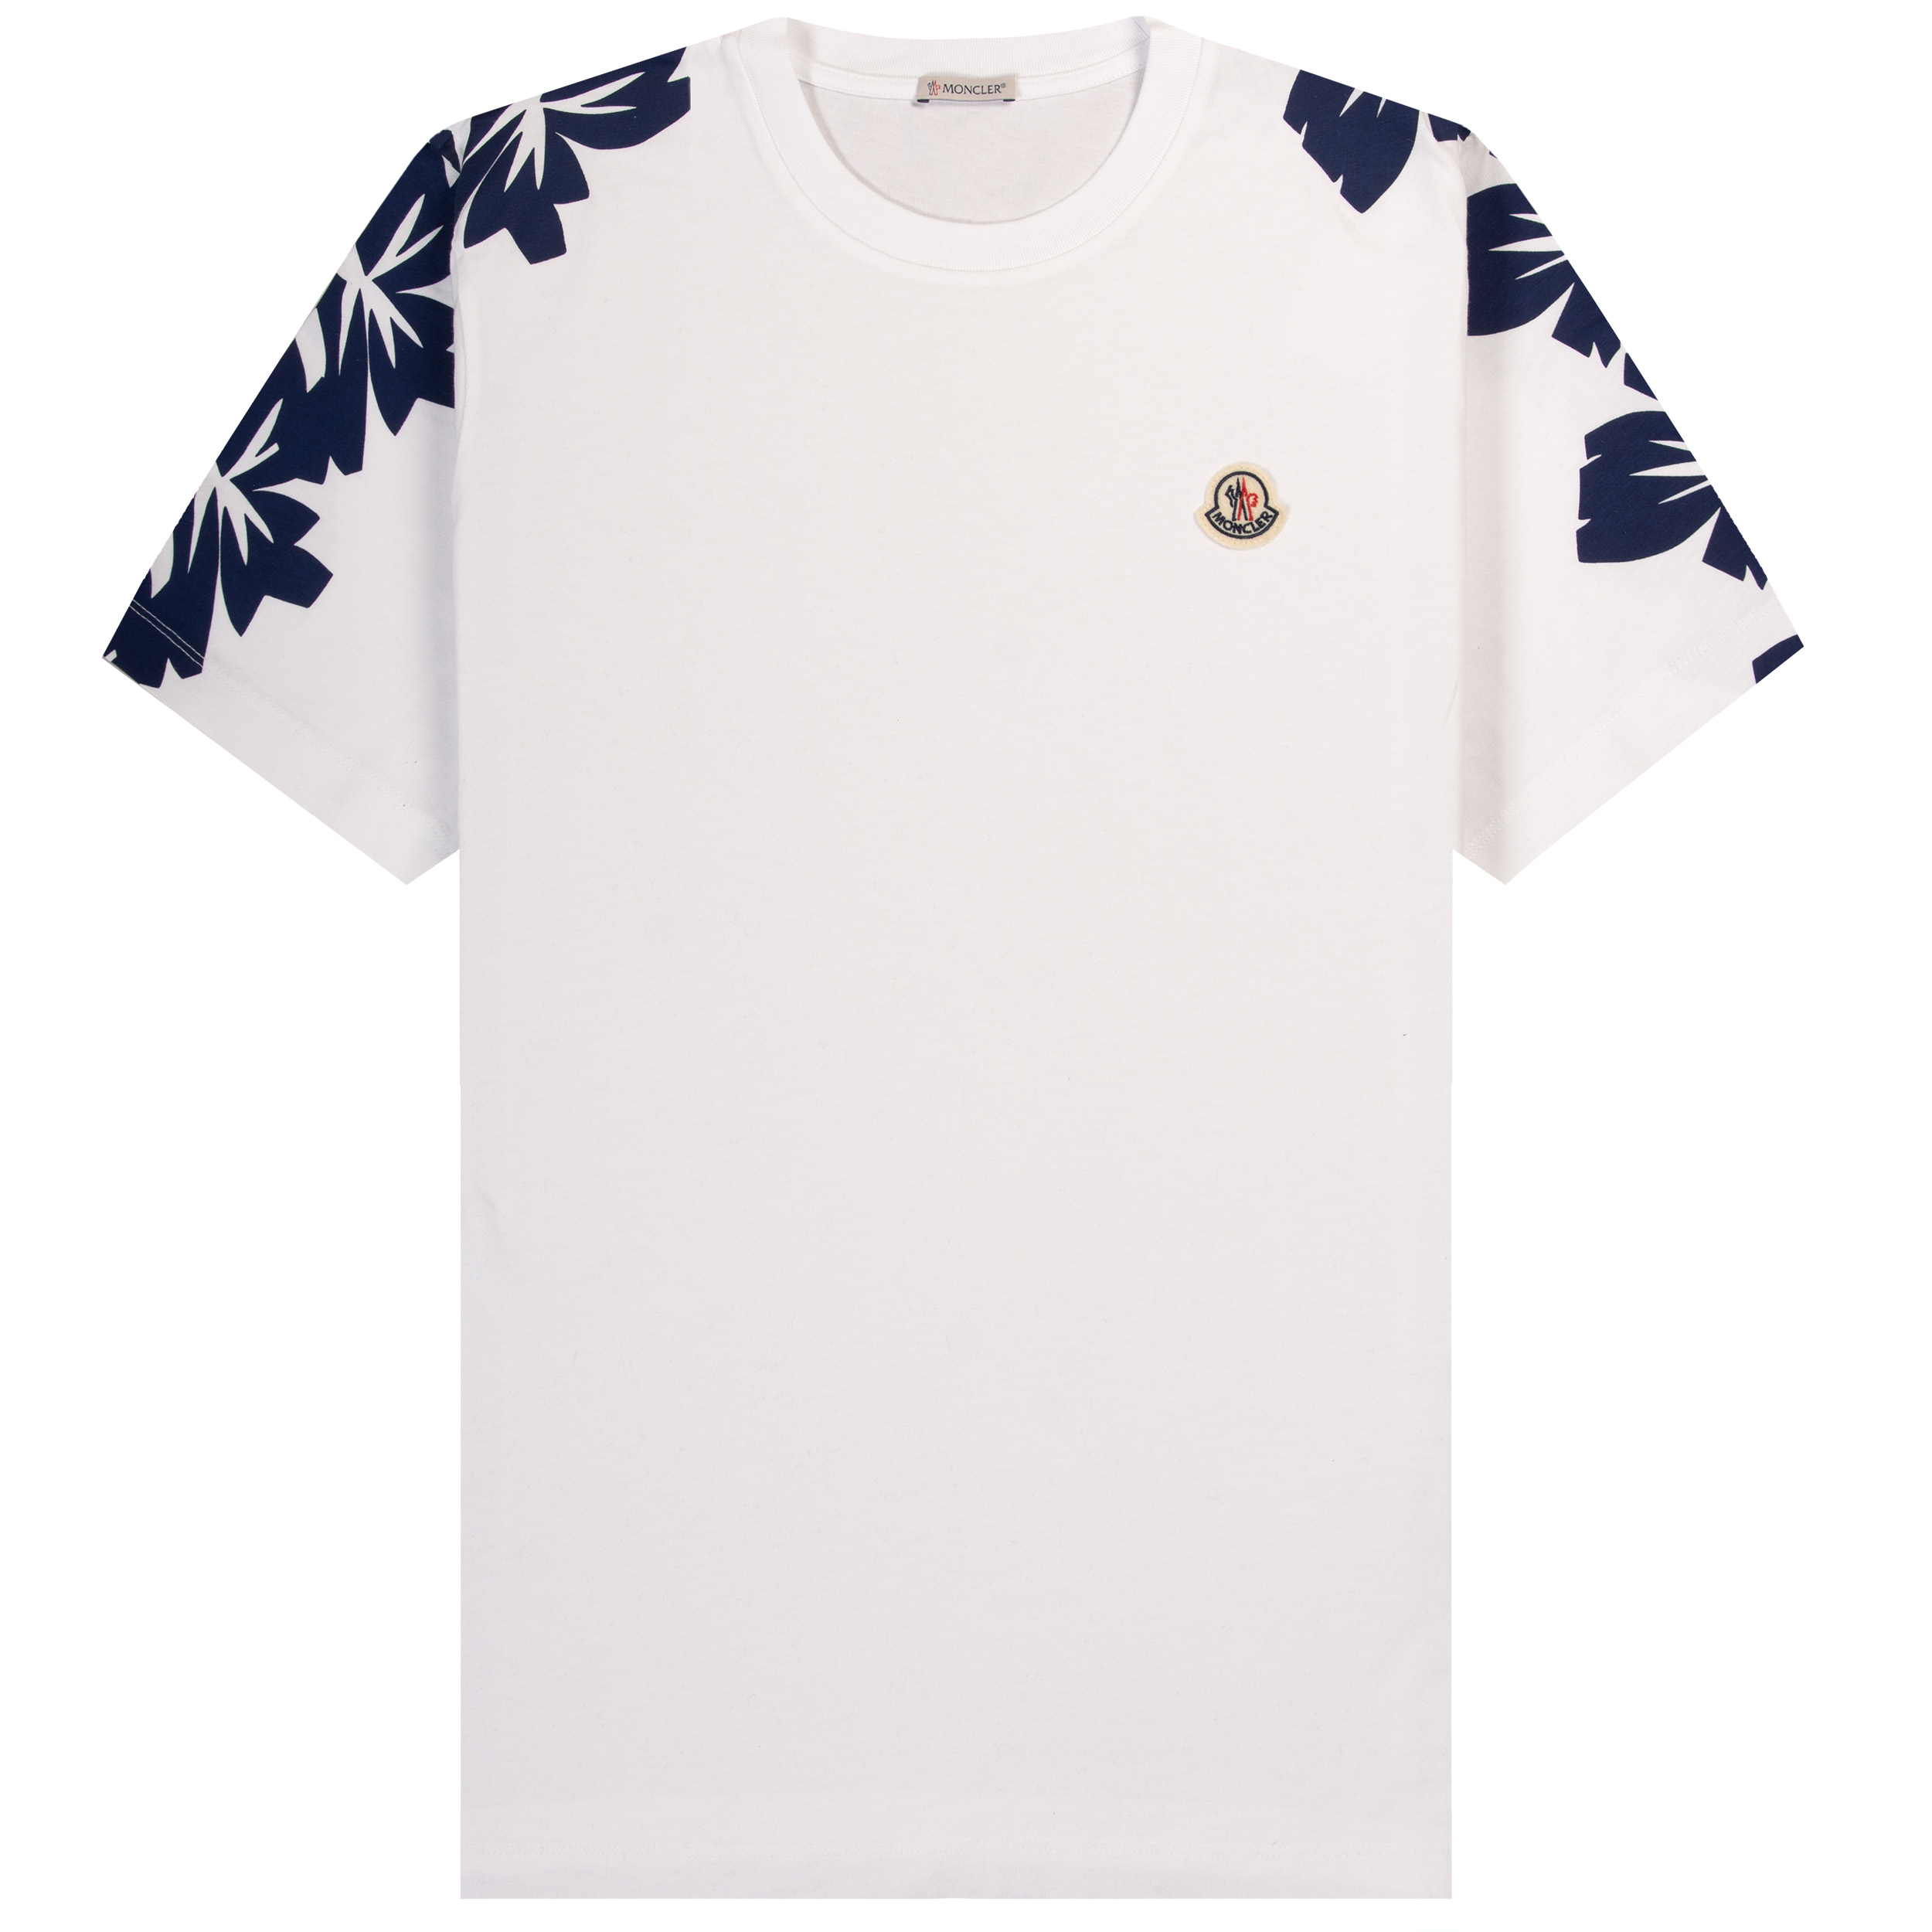 Moncler Tropical Print T-Shirt White/Blue